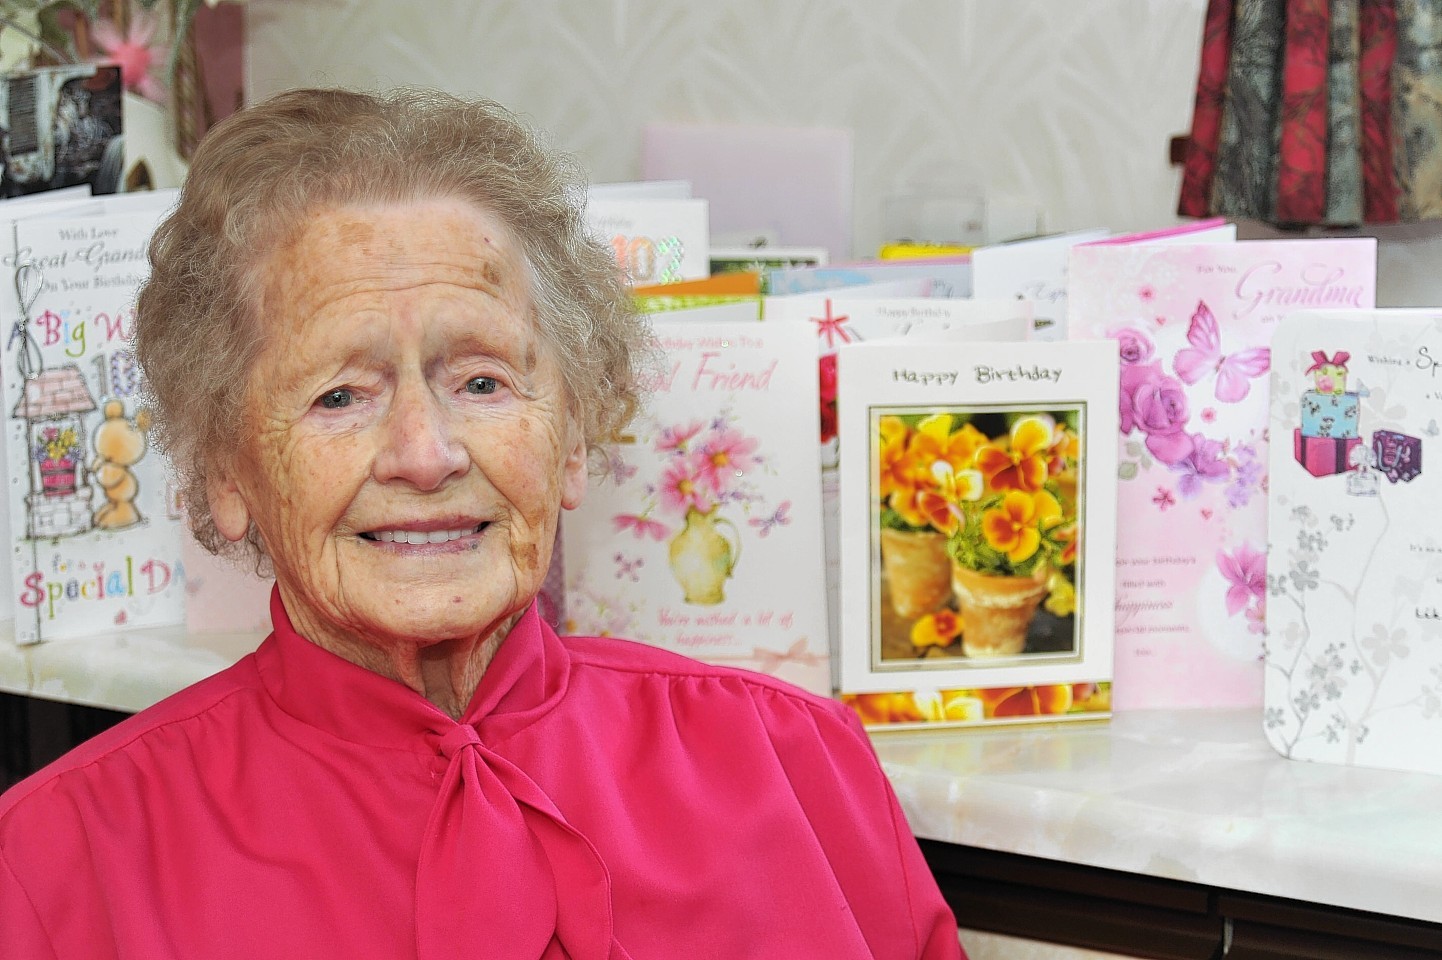 Christina Kidd is celebrating her 103rd birthday